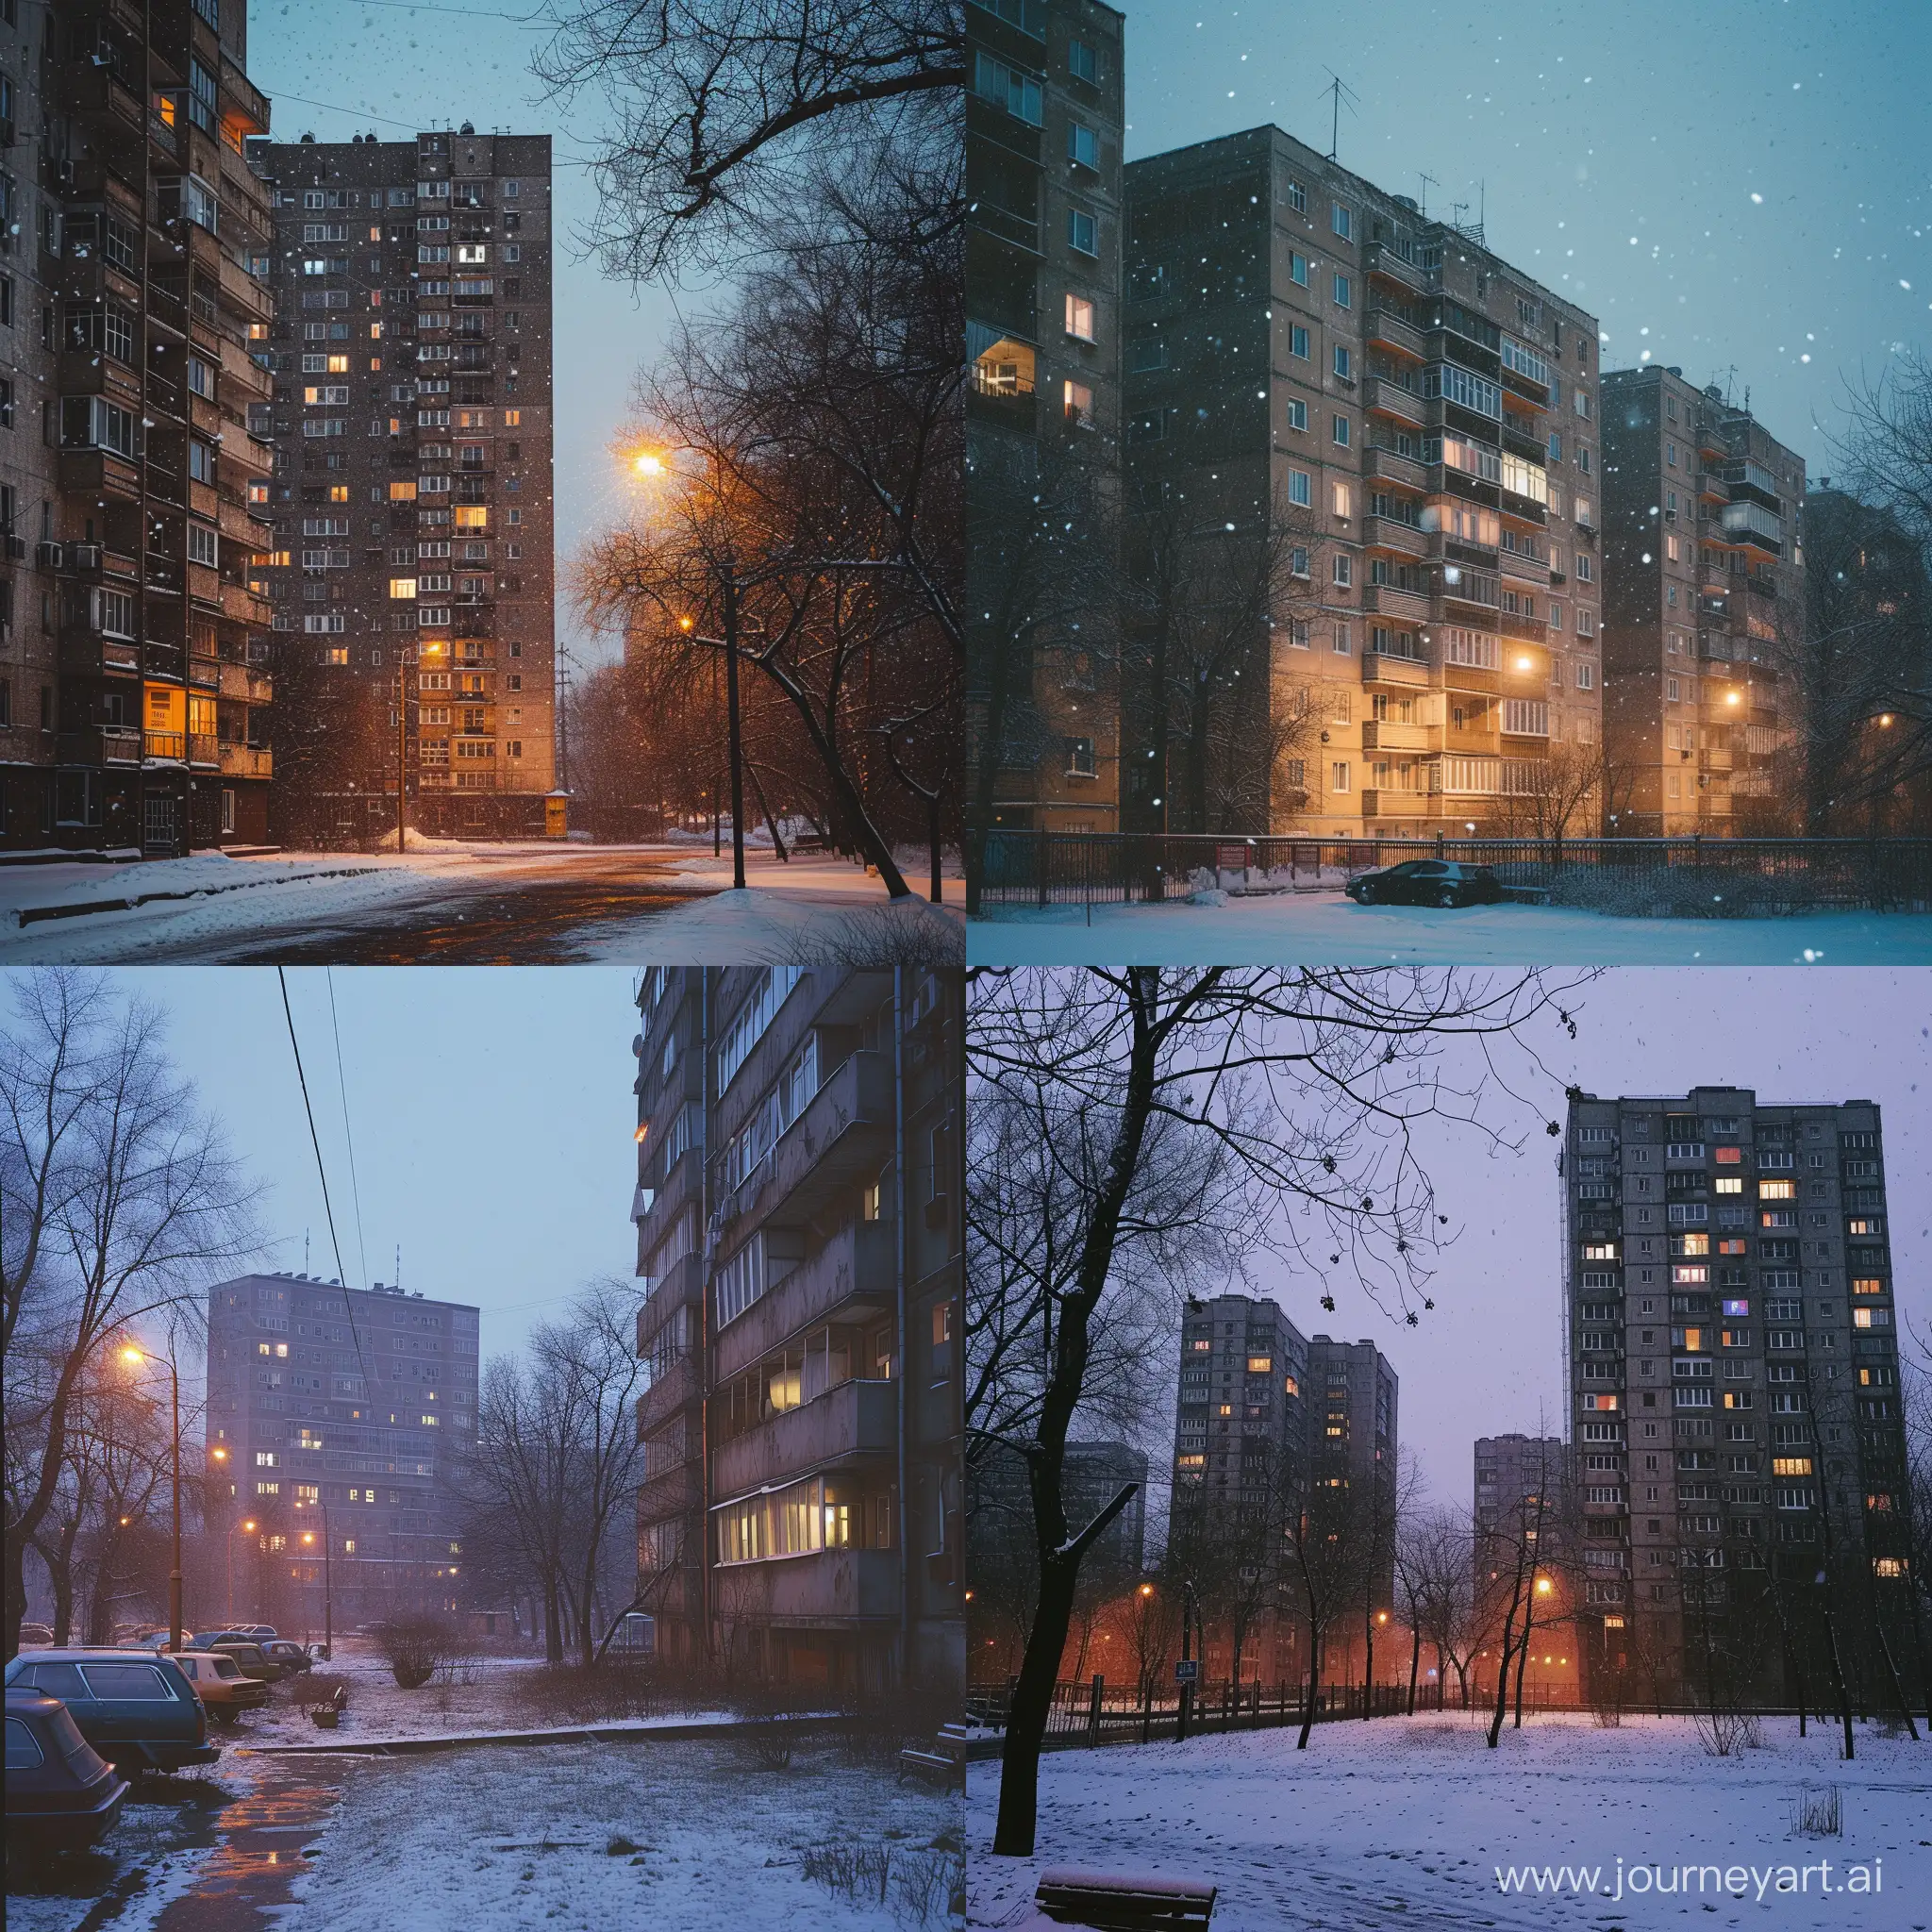 Soviet-Postmodernism-Architecture-in-Evening-Snowfall